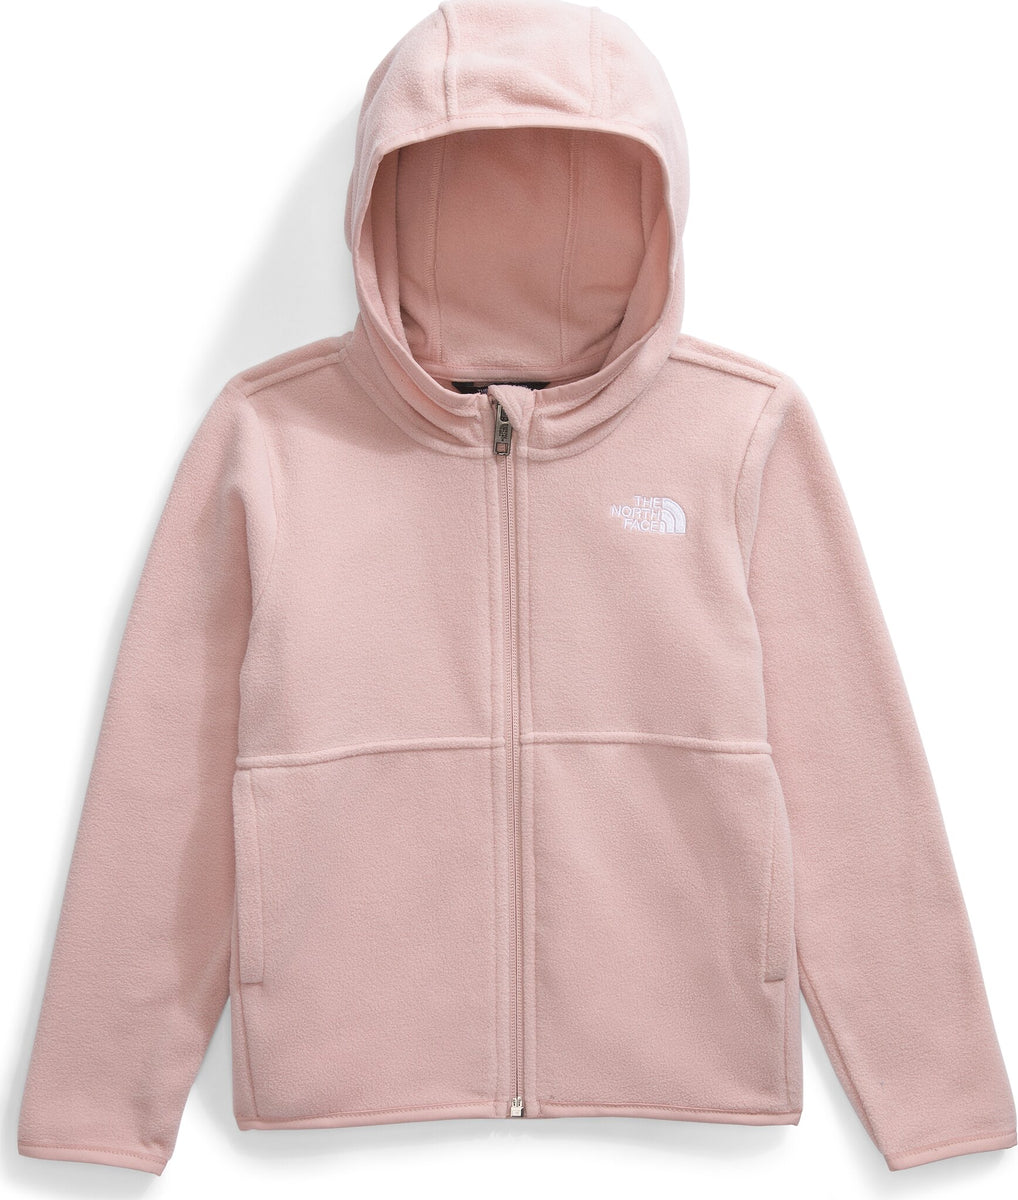 The North Face Youth Girls Denali Jacket Fleece Full Zip Pink Gray L